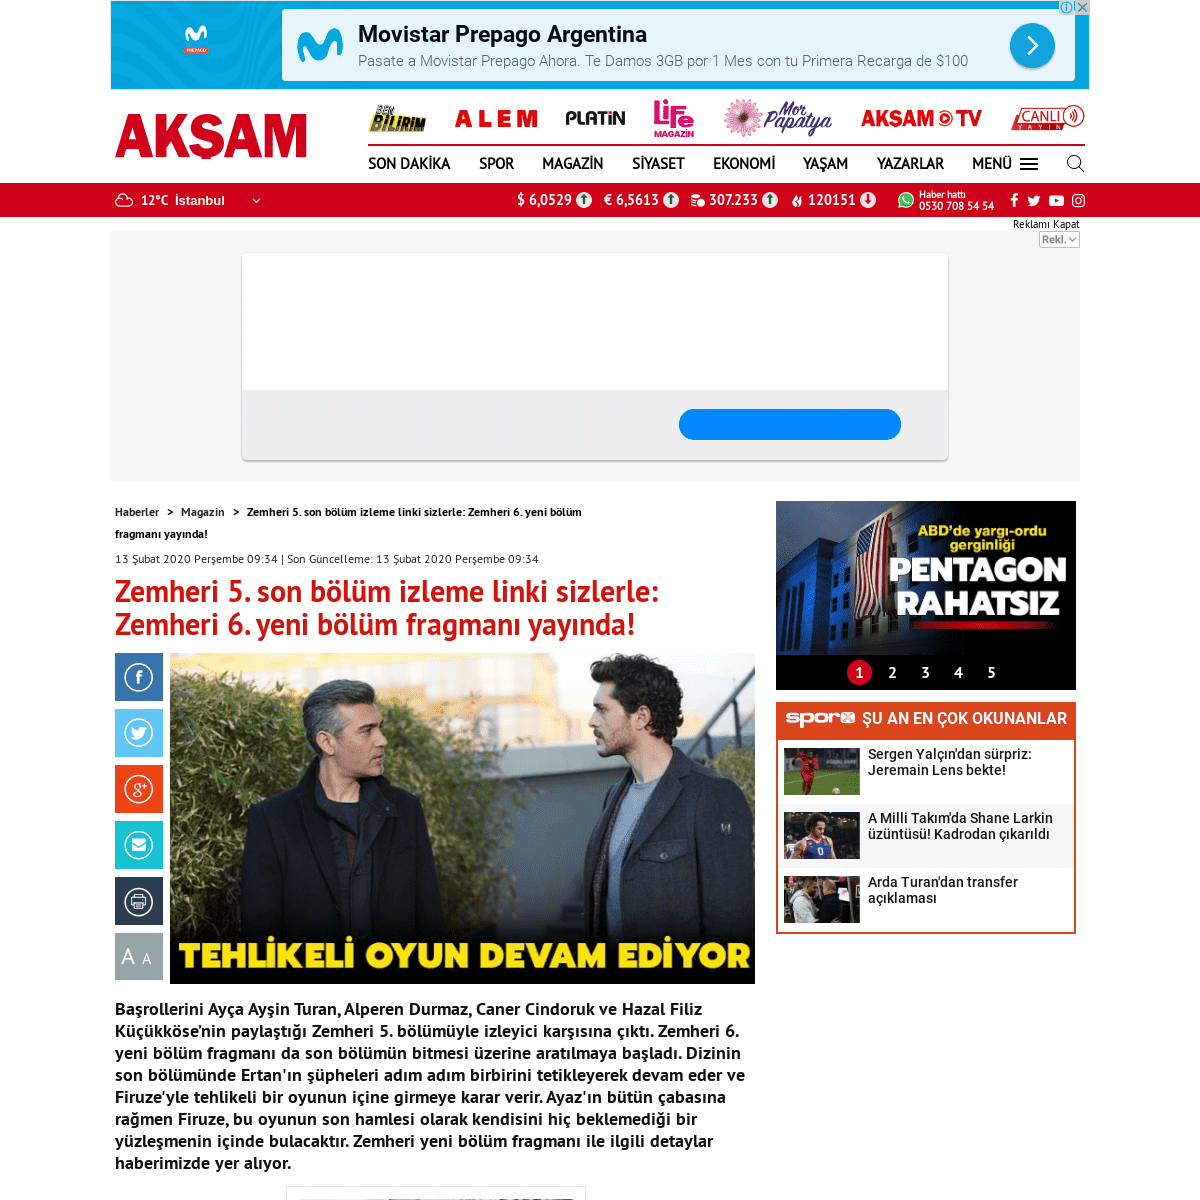 A complete backup of www.aksam.com.tr/magazin/zemheri-5-bolum-izleme-linki-zemheri-6-yeni-bolum-fragmani-yayinlandi-mi/haber-104